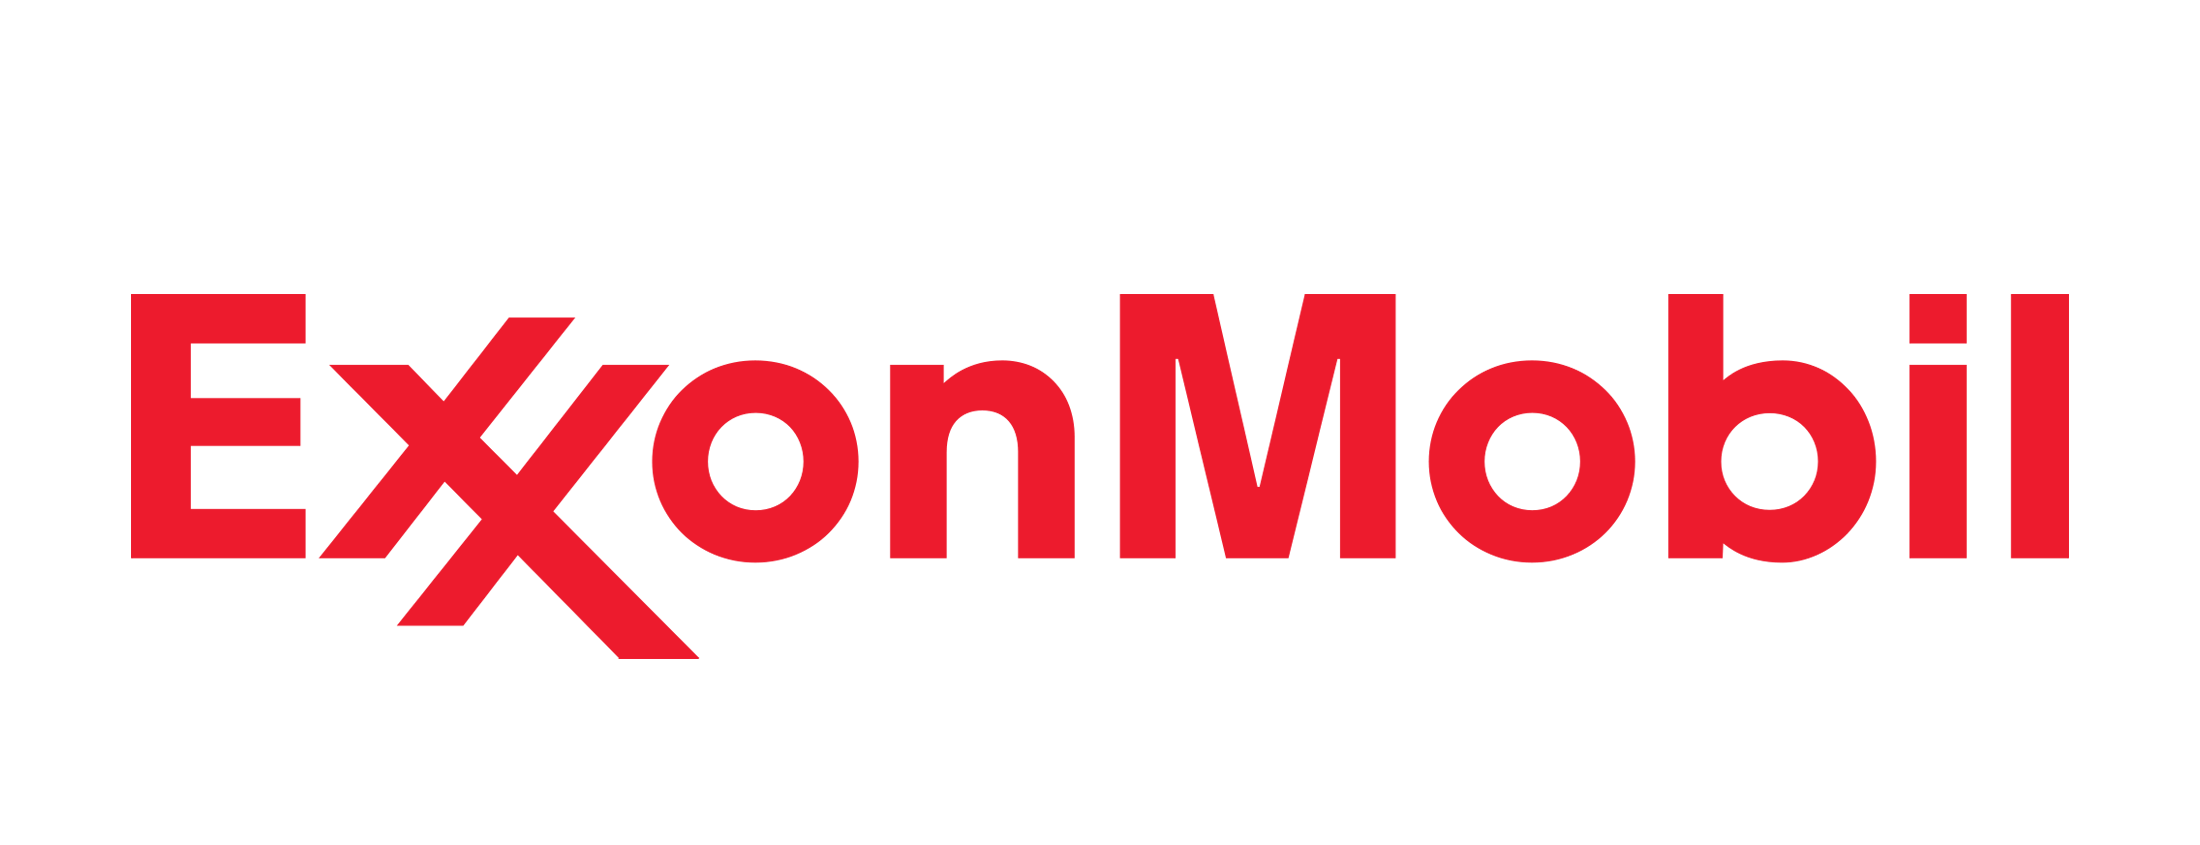 ExxonMobil salary structure